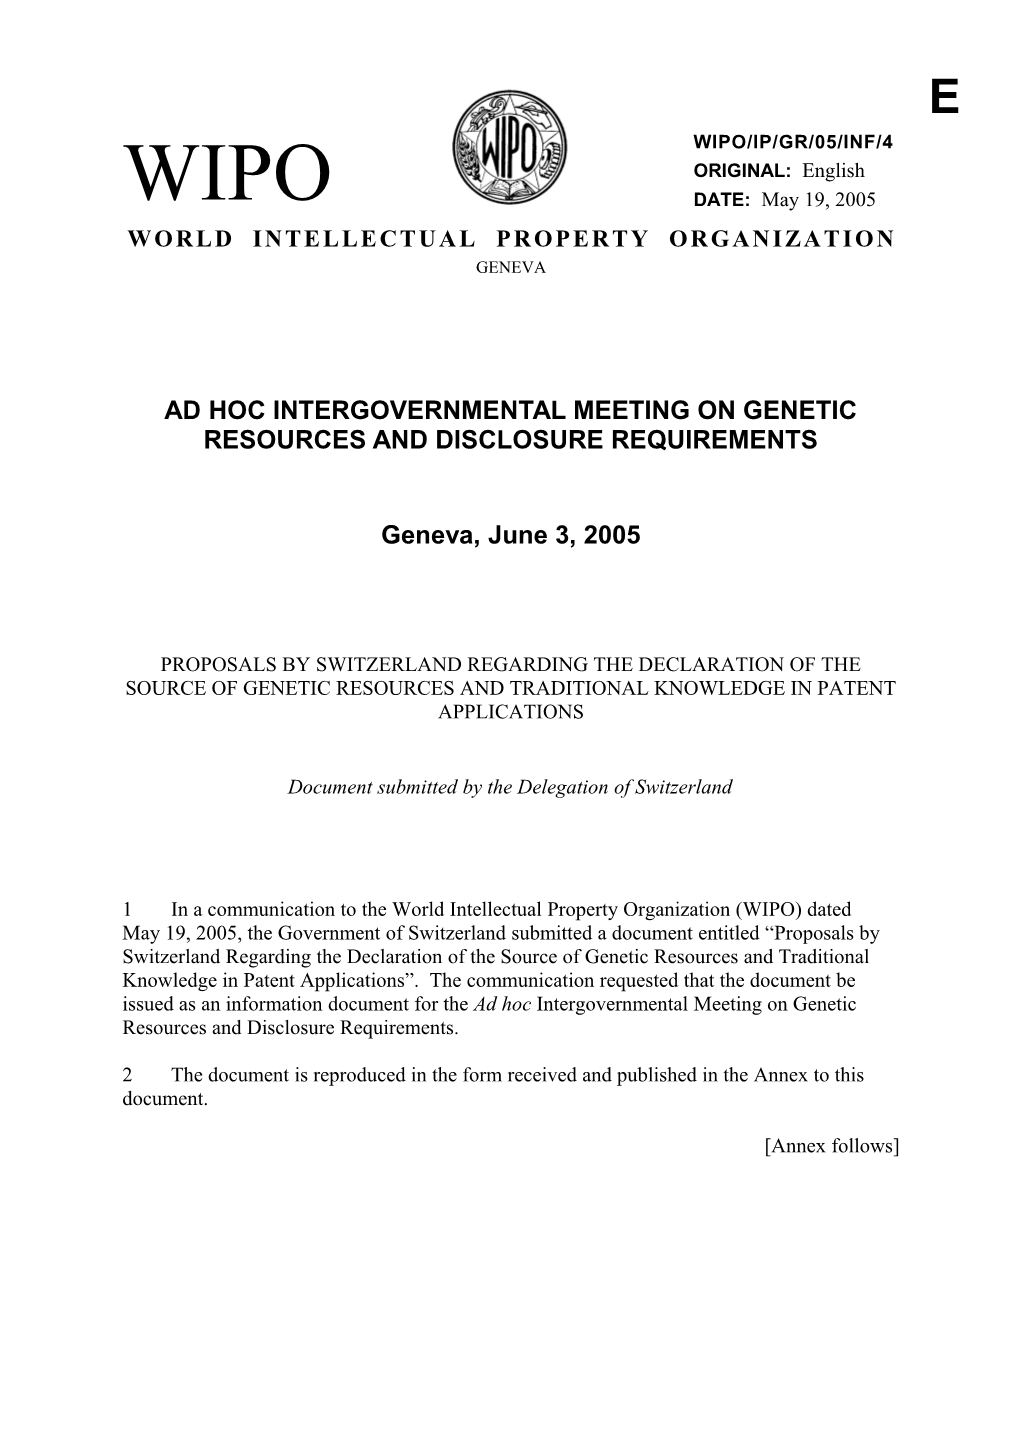 WIPO/IP/GR/05/INF/4: Proposals by Switzerland Regarding the Declaratio of the Source Of